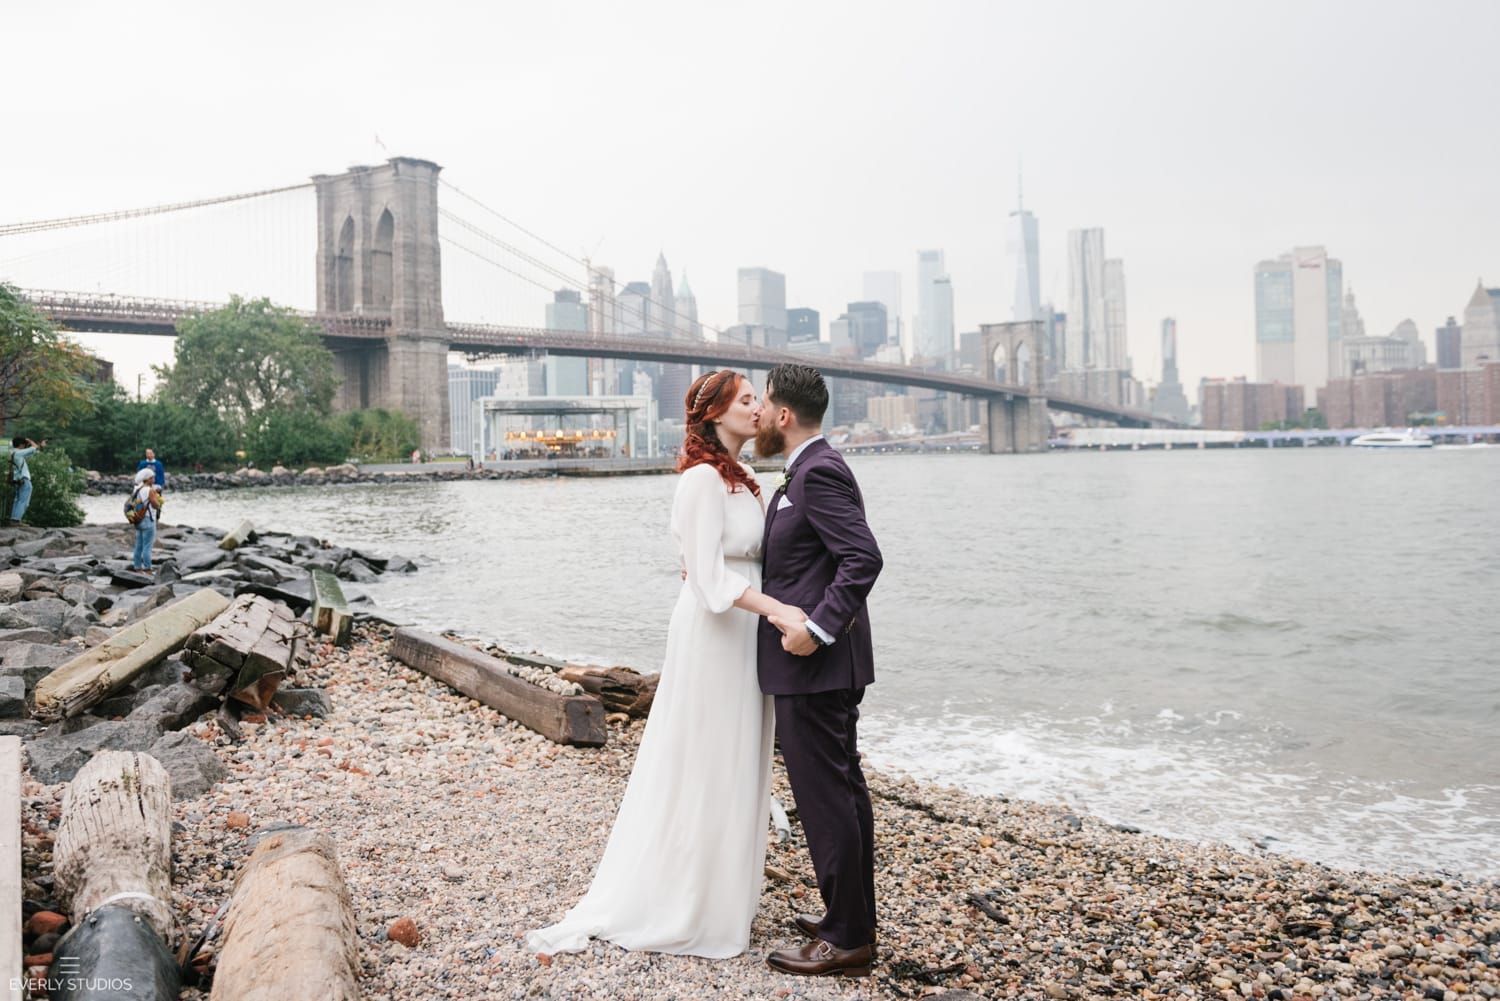 Brooklyn Bridge Park elopement, NYC. Photos by NYC elopement photographer Everly Studios, www.everlystudios.com